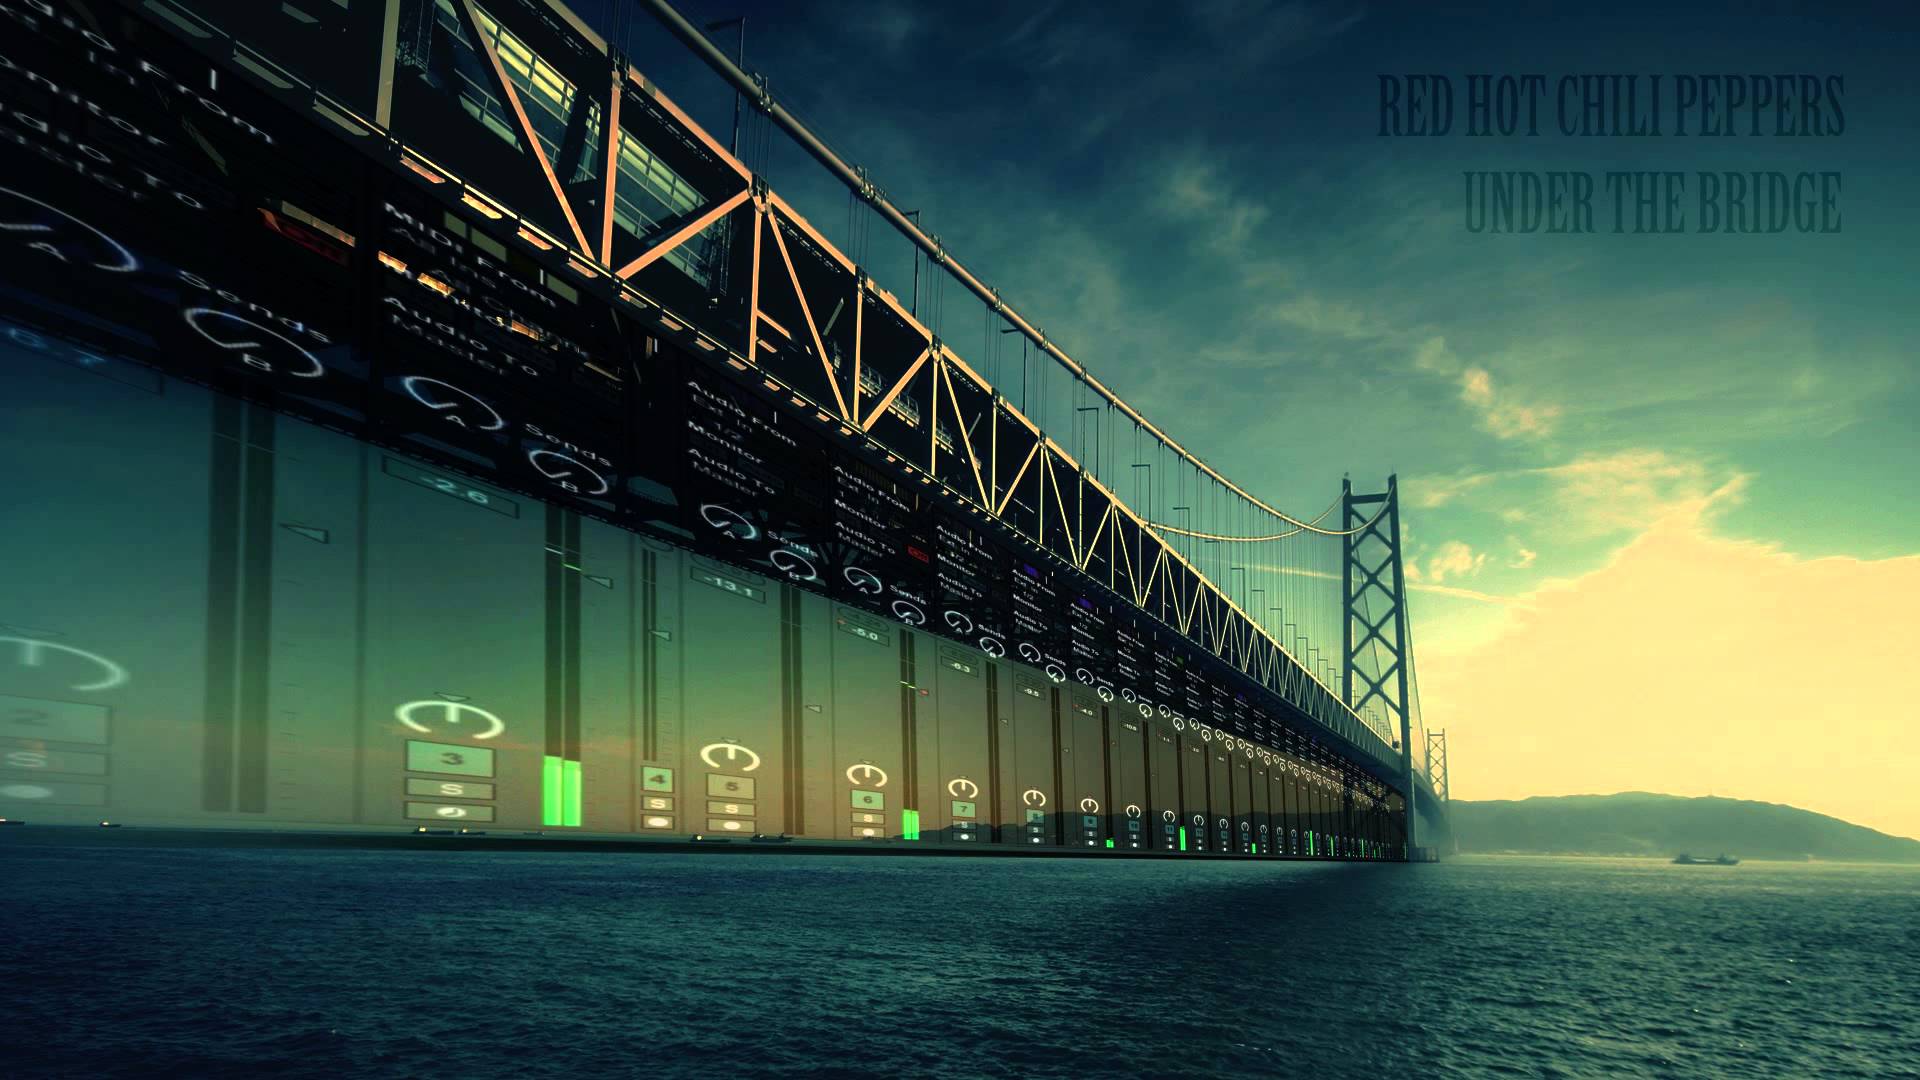 red hot chili peppers - under the bridge (prebanda remix) - YouTube